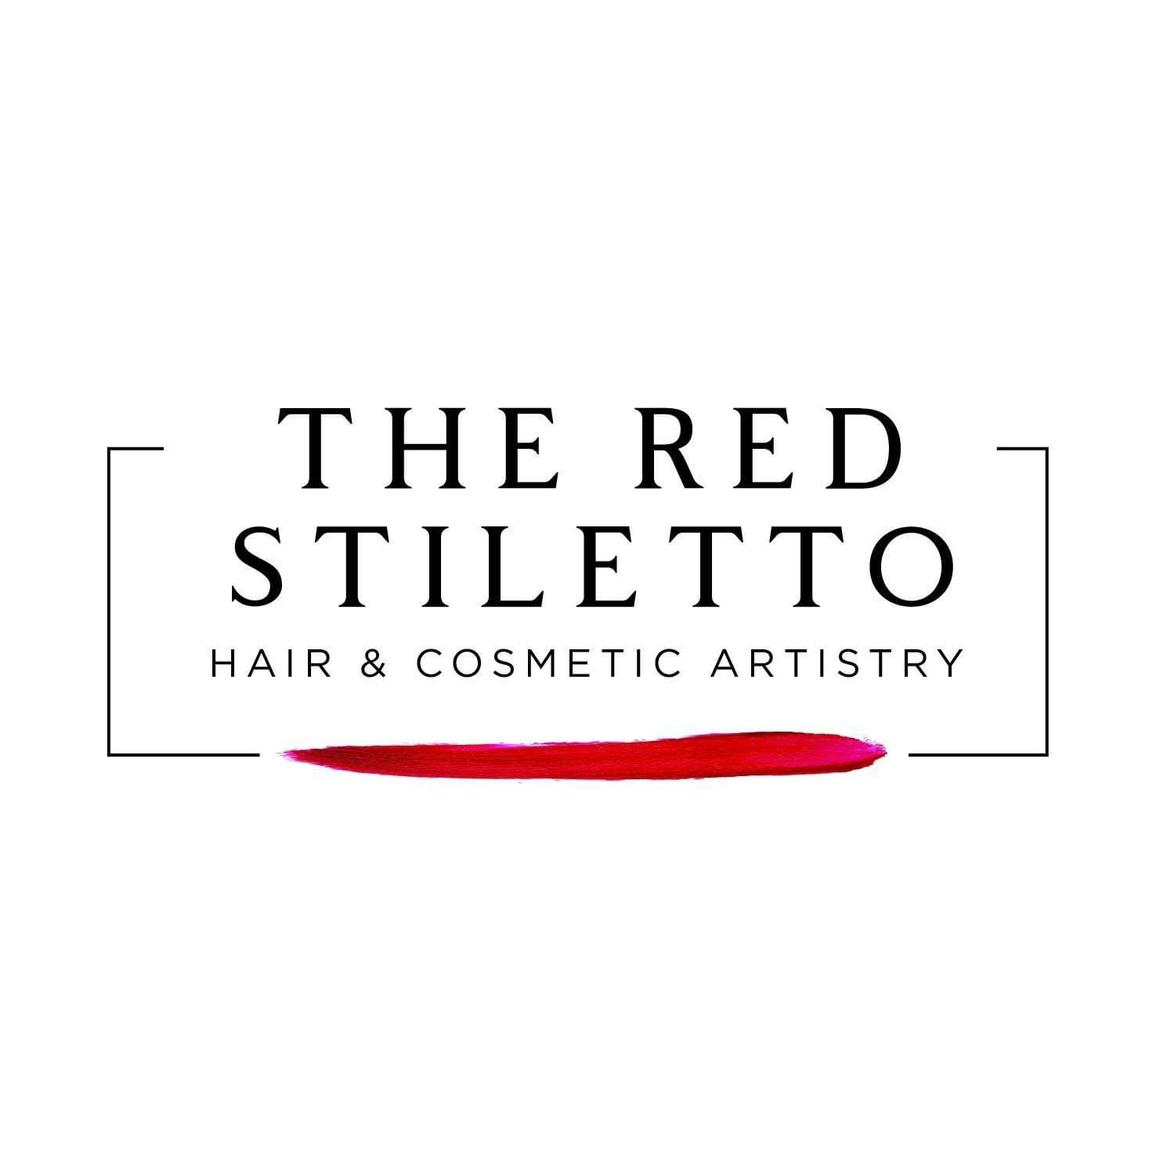 redstiletto's images